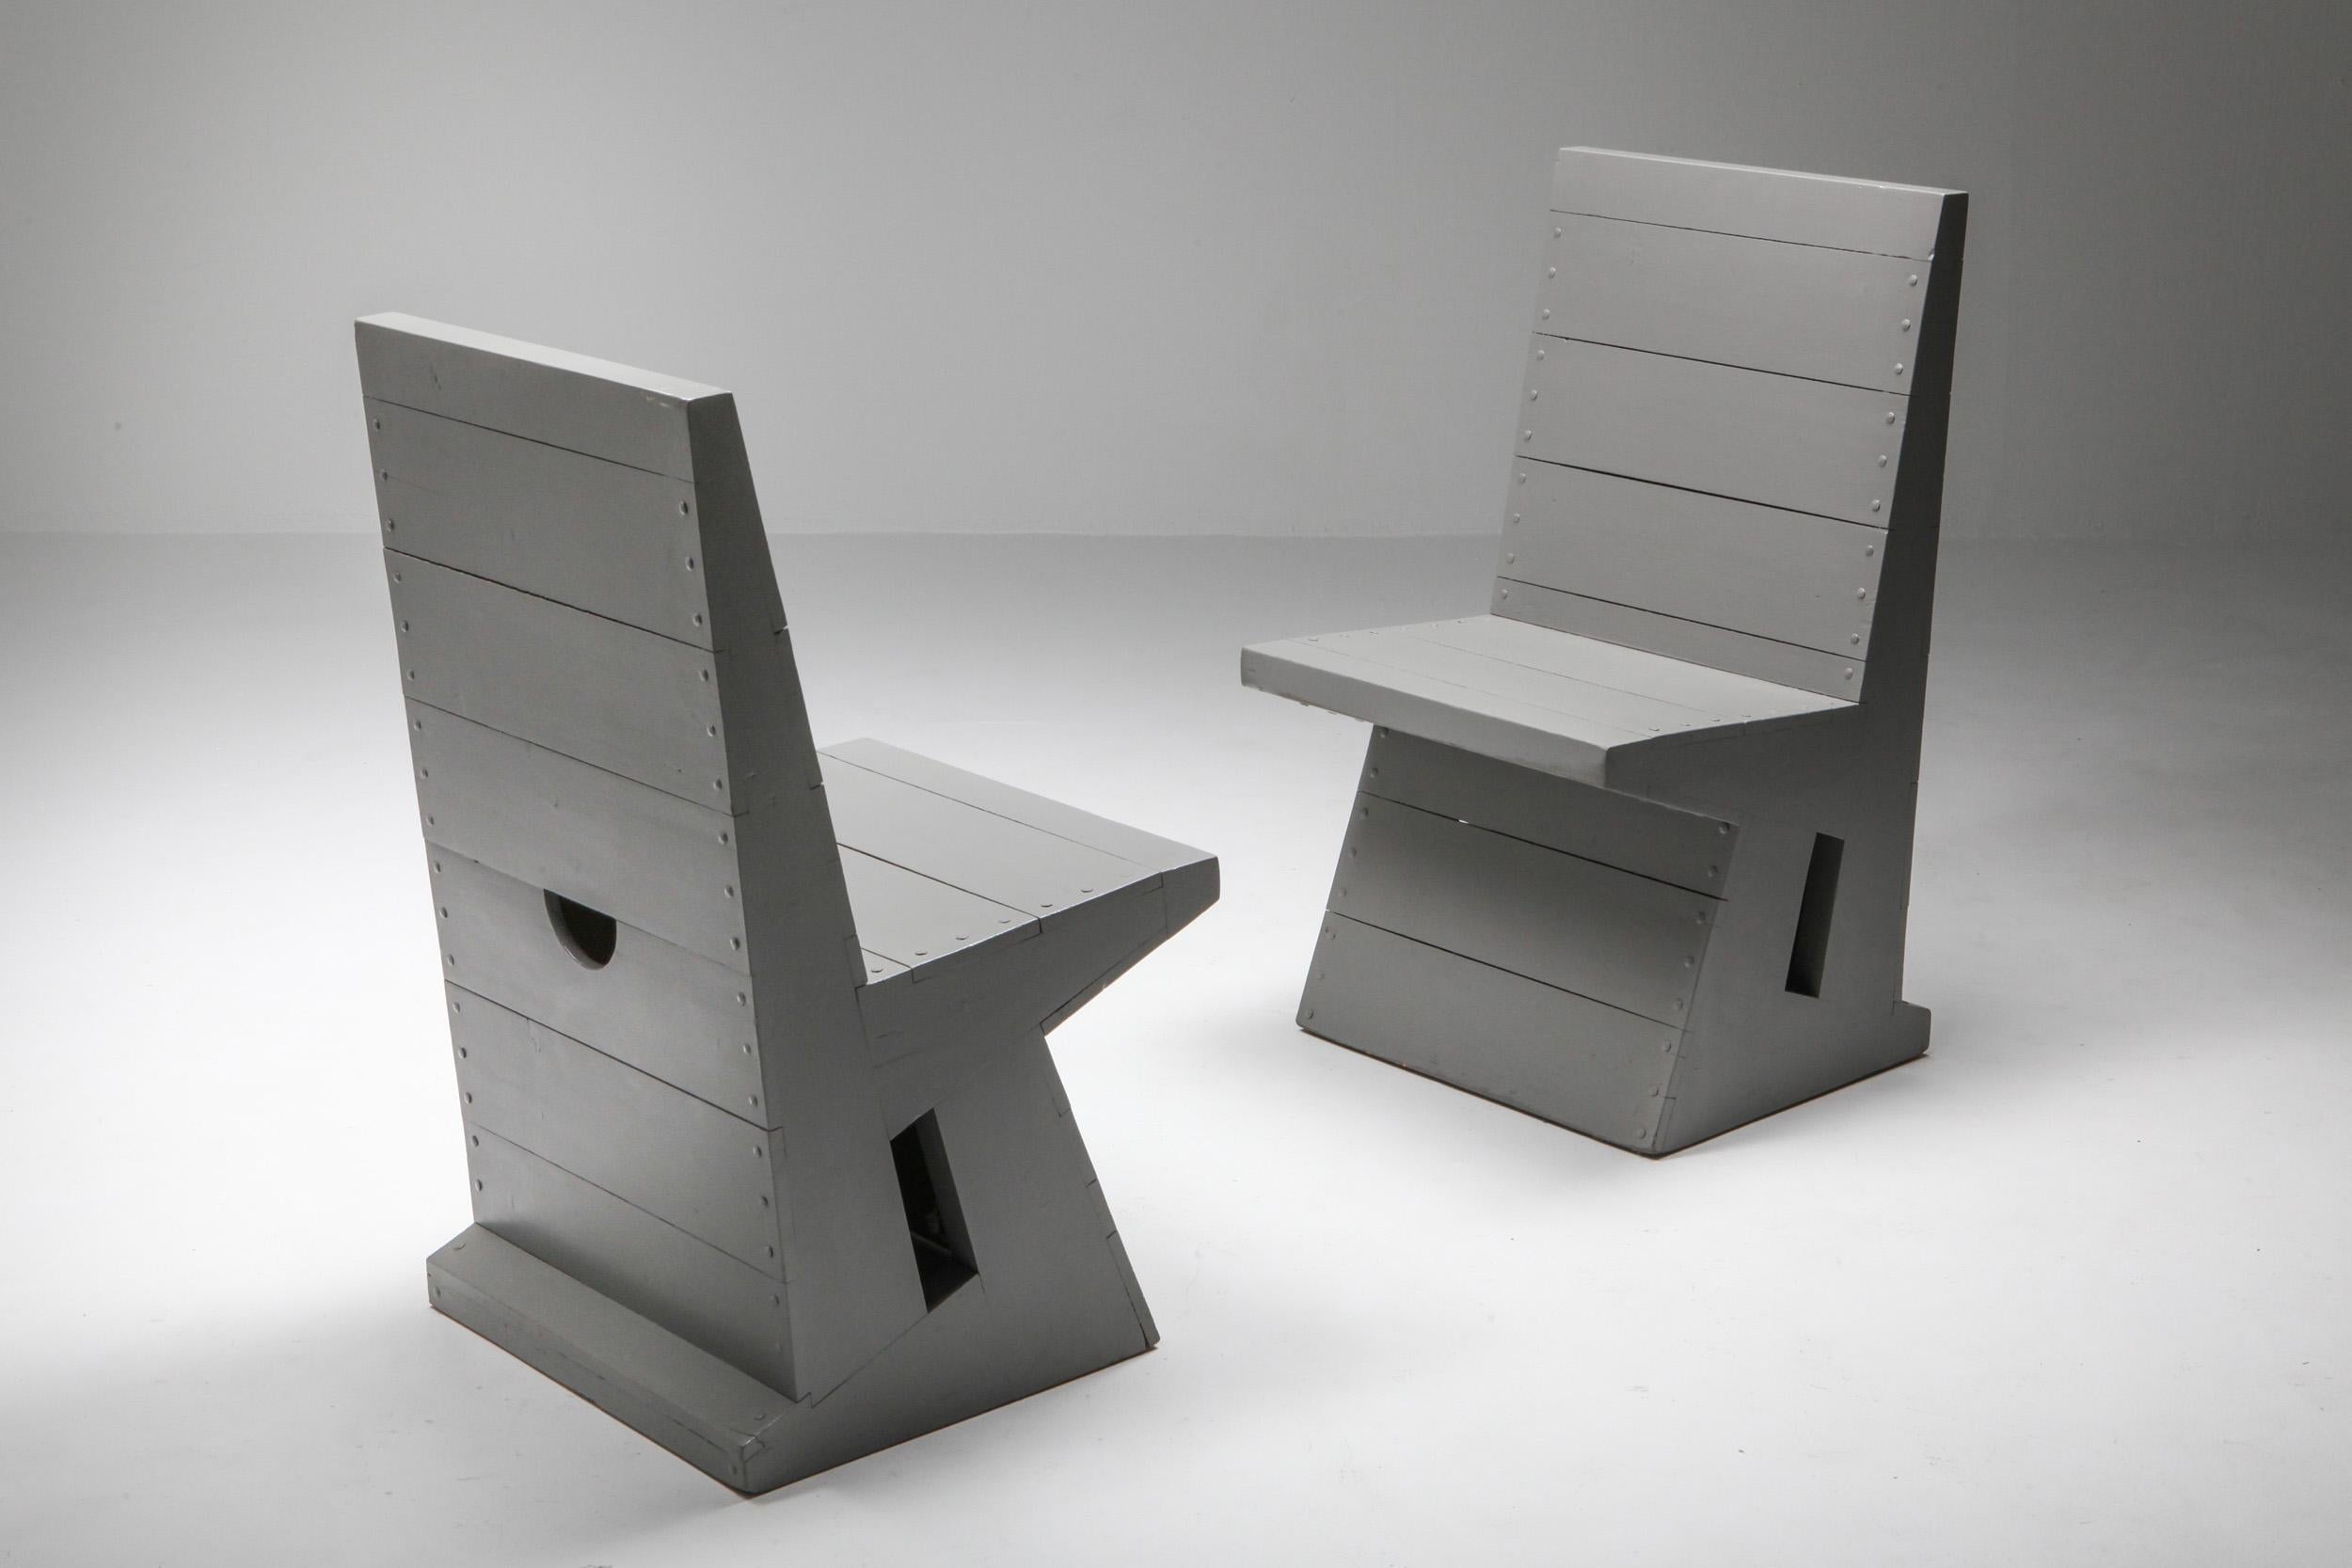 Mid-20th Century Dom Hans Van Der Laan Chairs, Bossche School, Dutch Design, 1960s For Sale